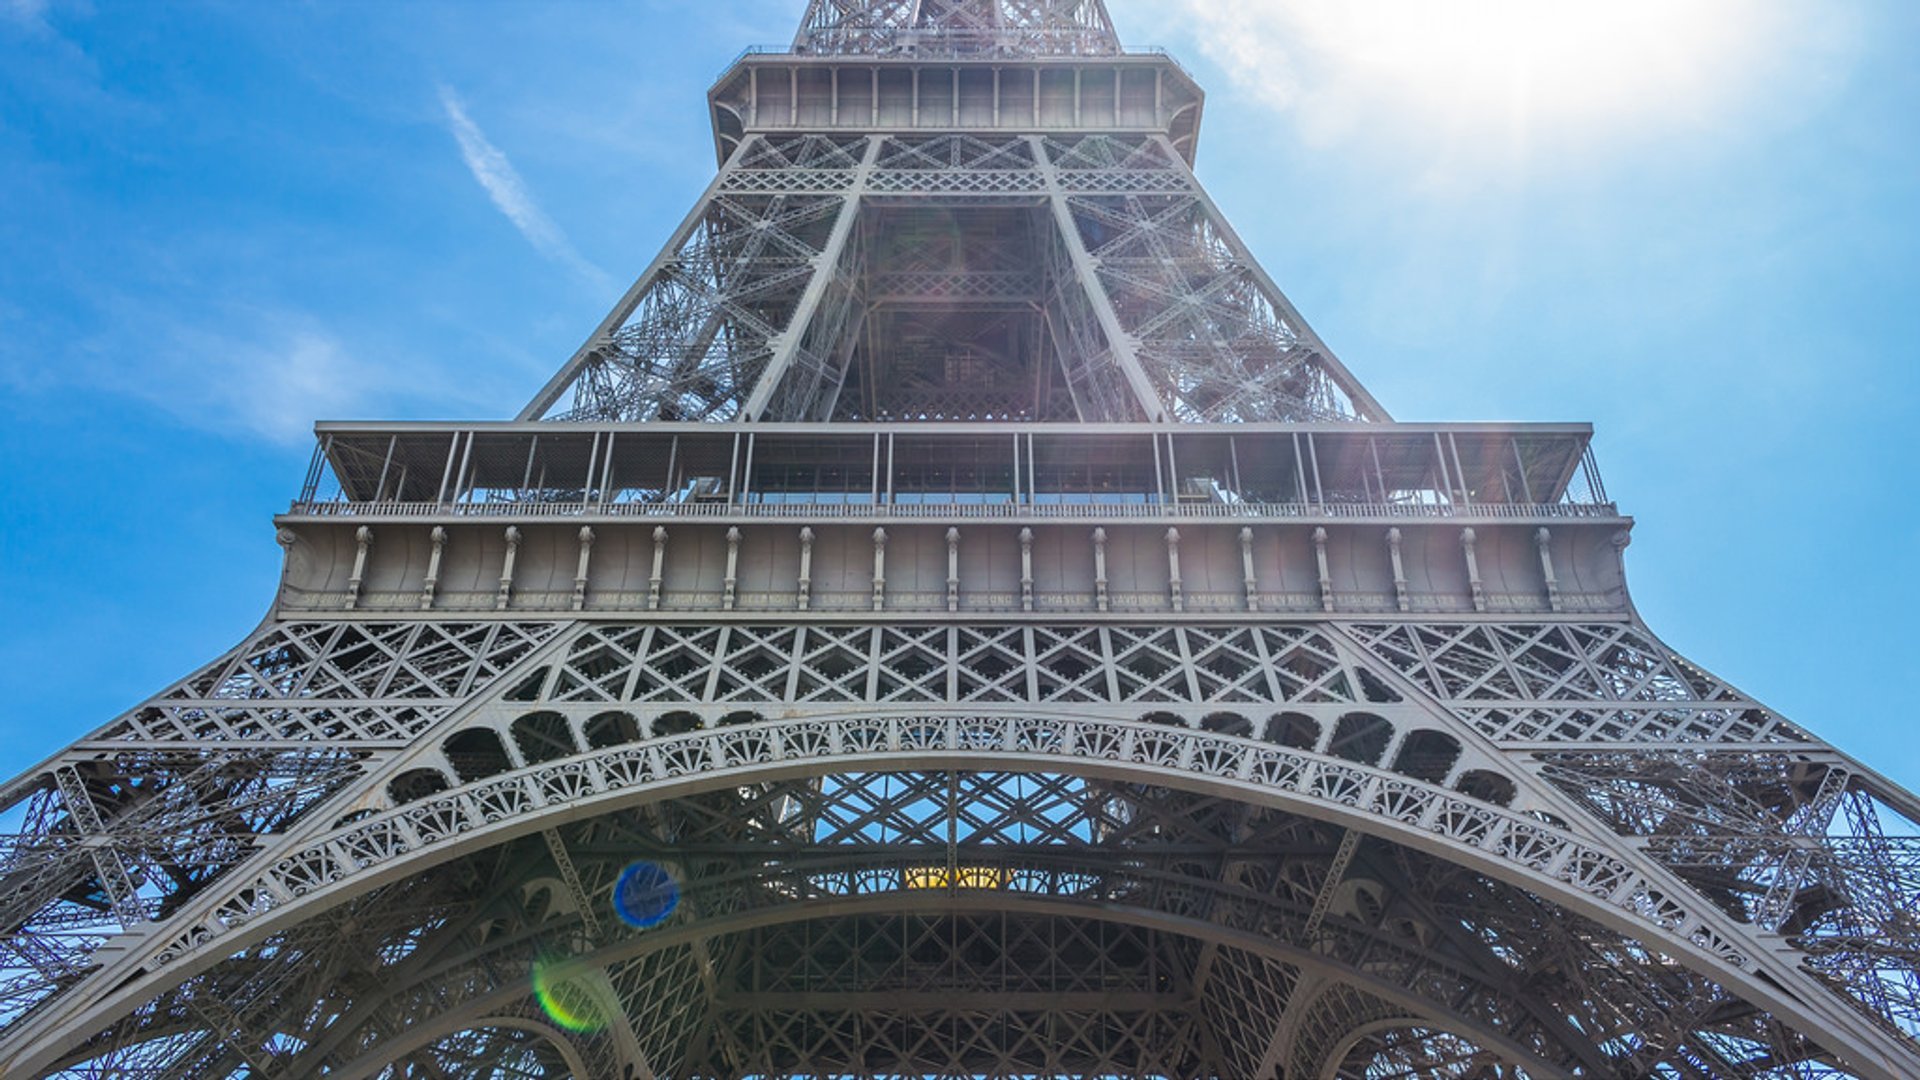 Bemalung des Eiffelturms